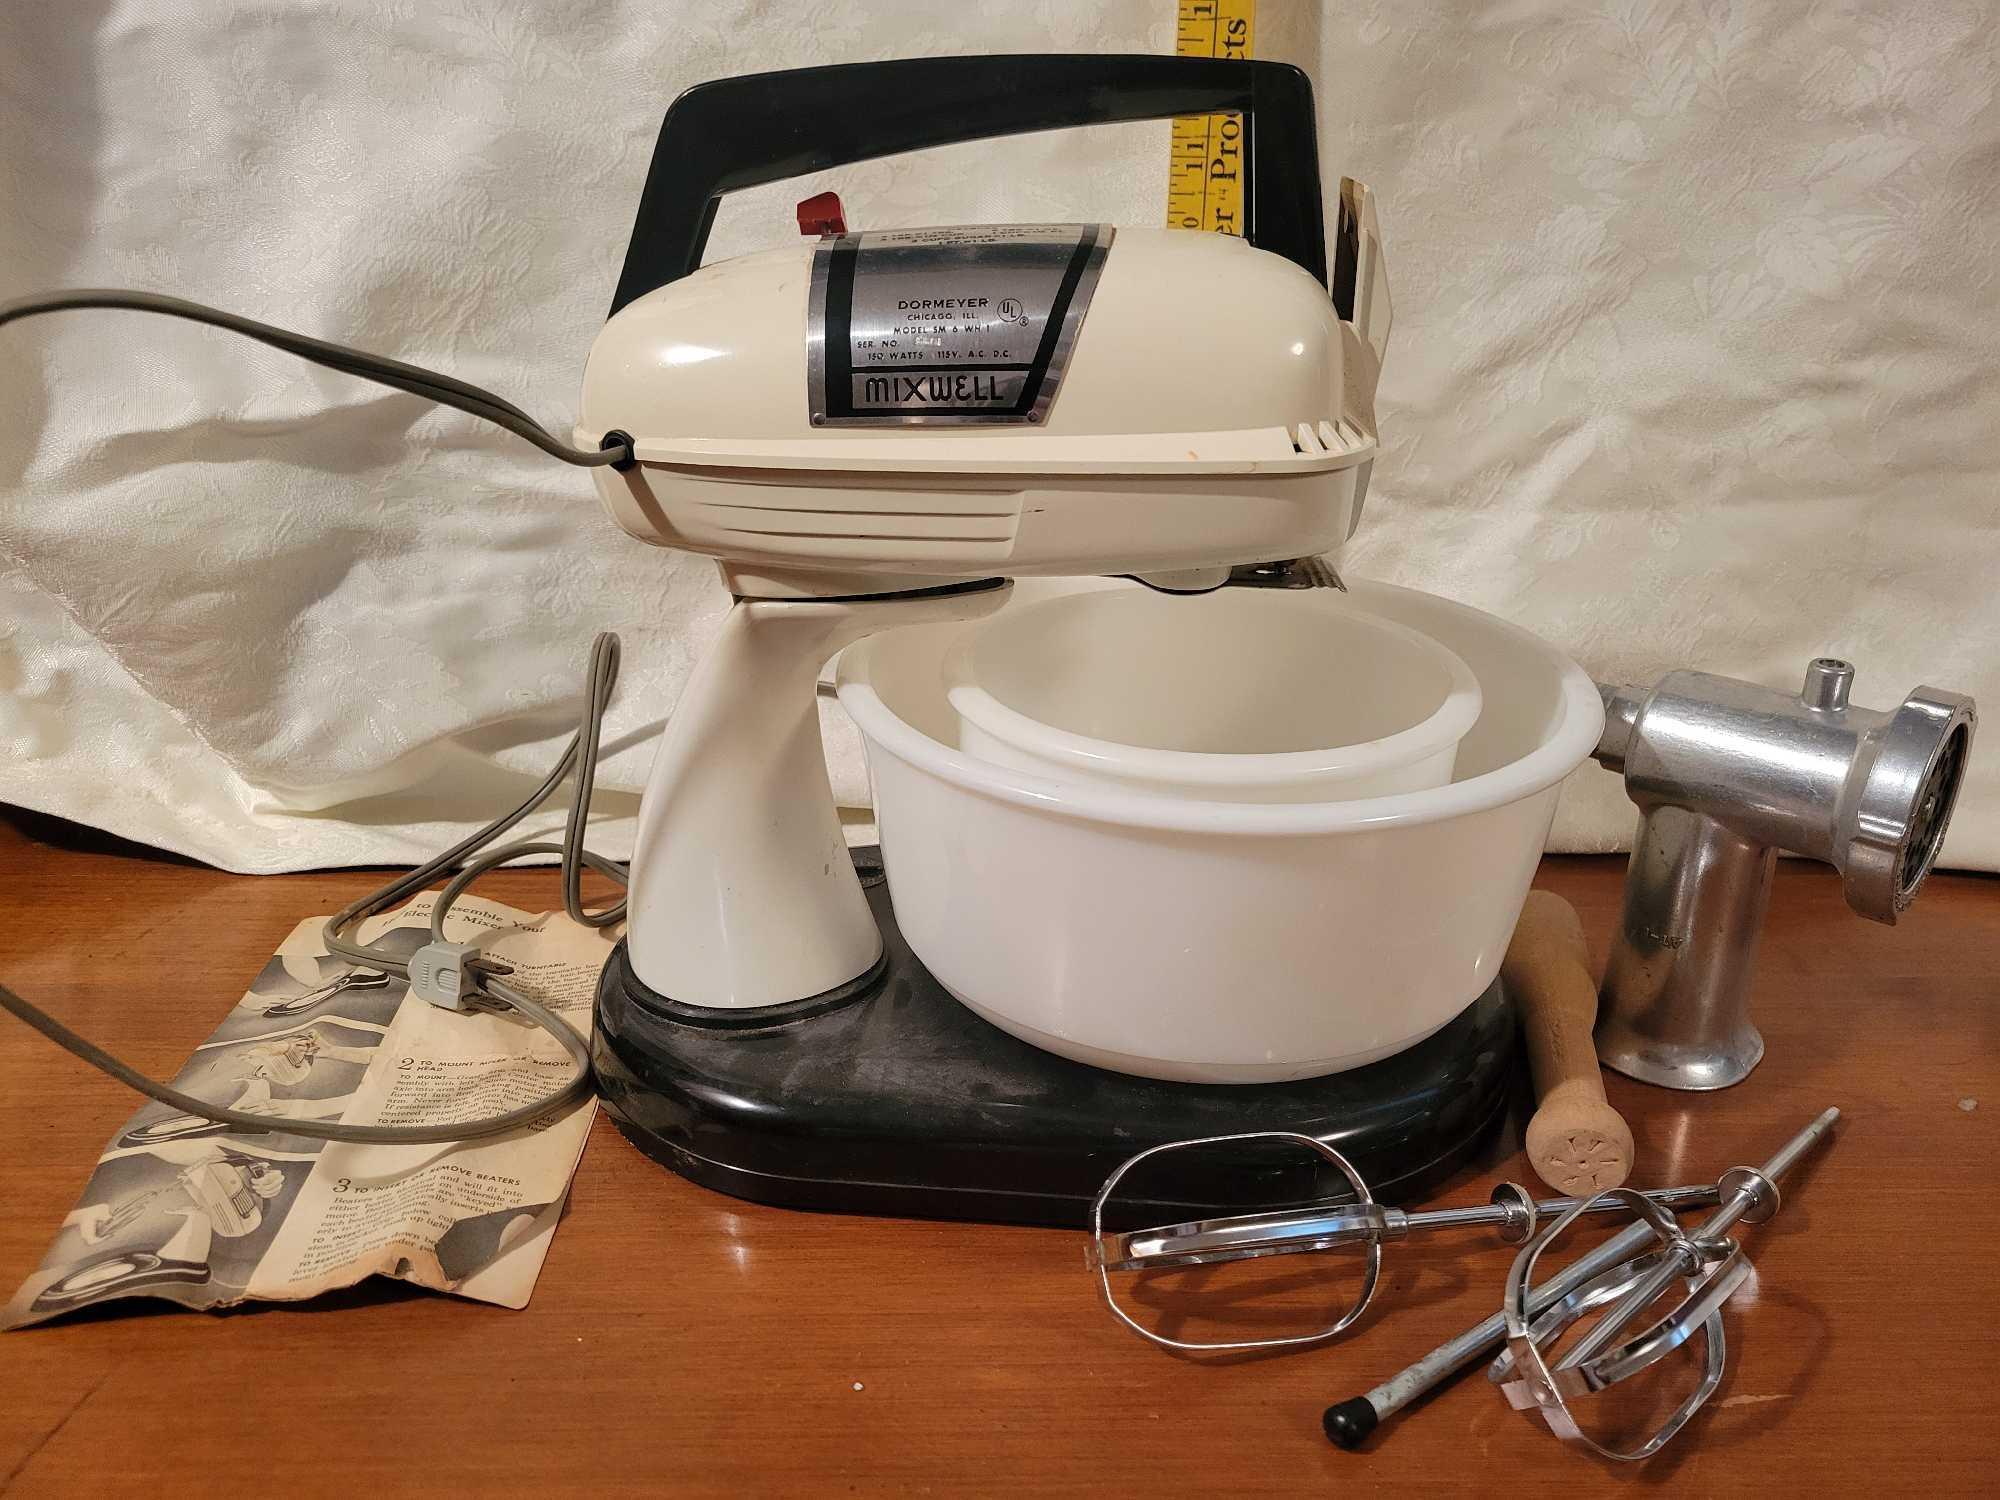 Vintage Dormeyer Mixer and Food Processor